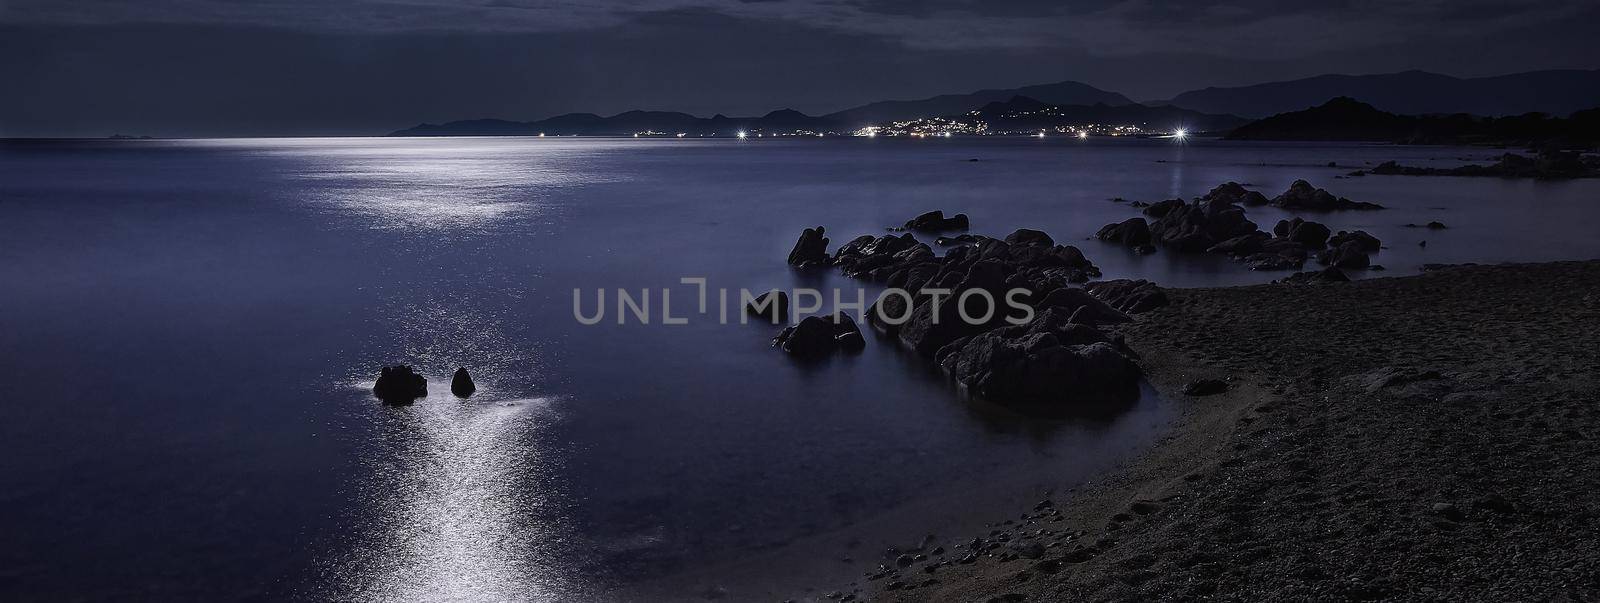 Sardinia beach night by pippocarlot